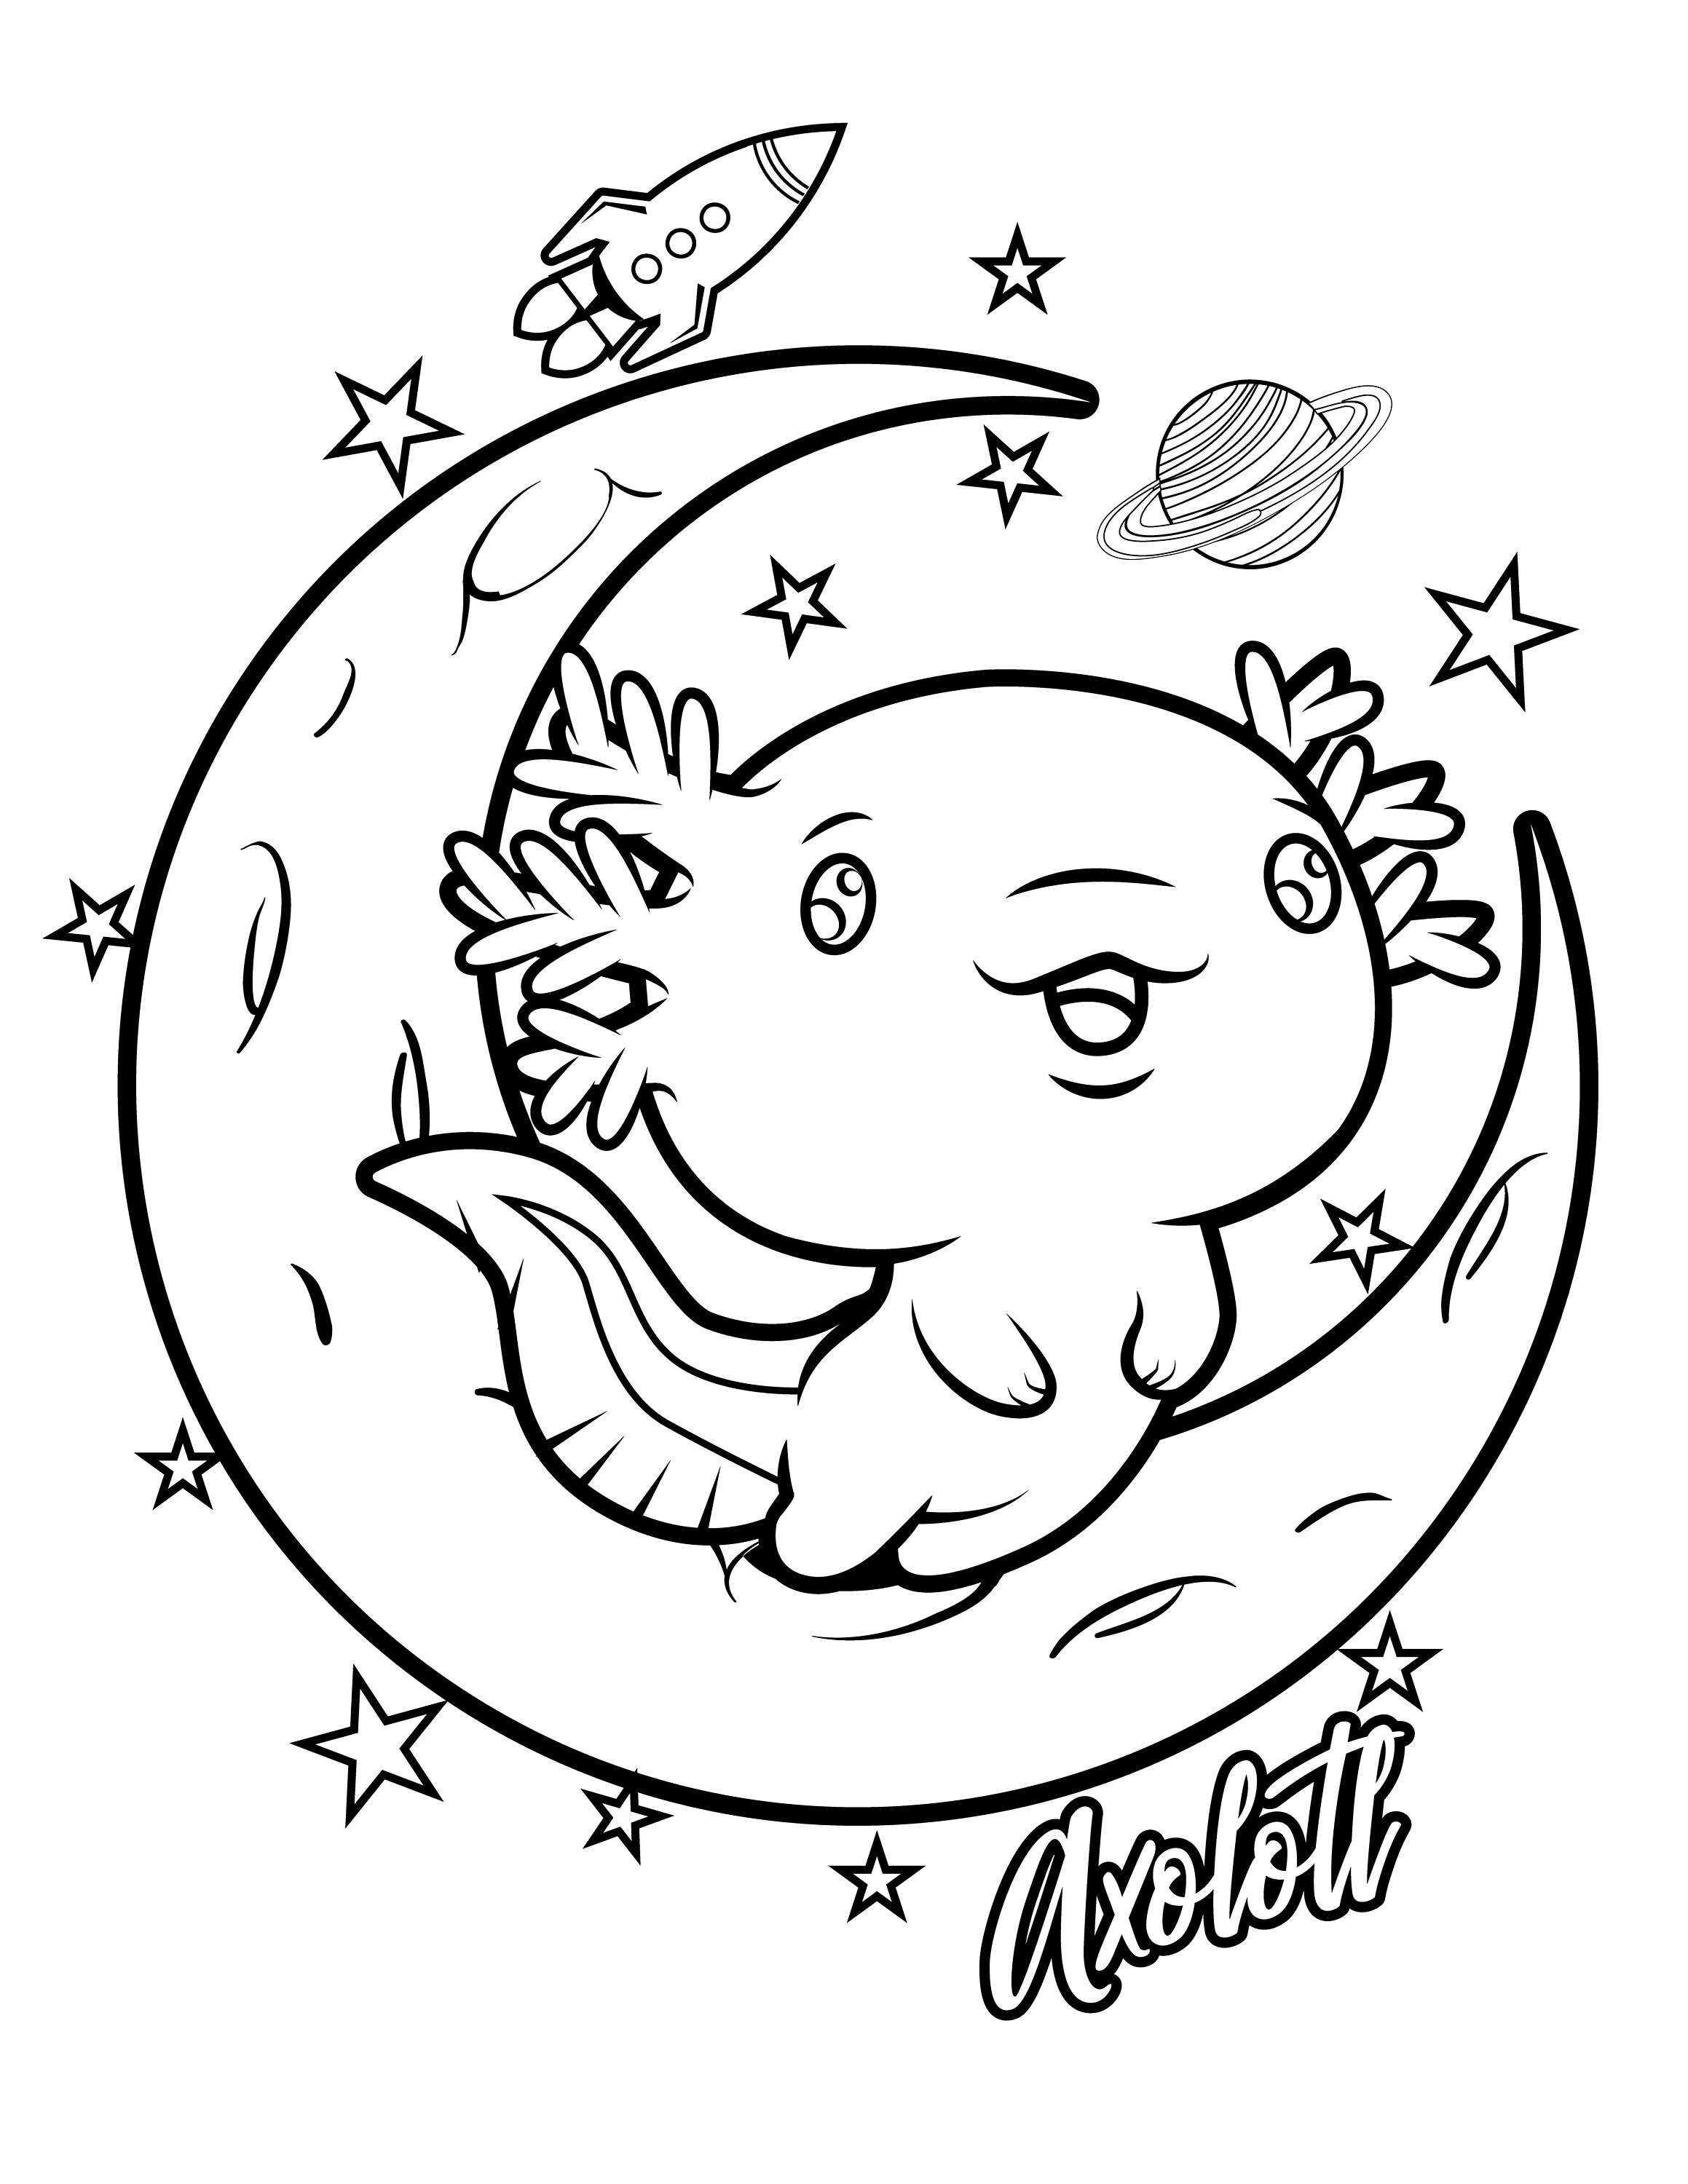 Cute Axolotl Coloring Pages Axolotl Yinyang Bobalotl Gamesolotl Readsolotl Digital